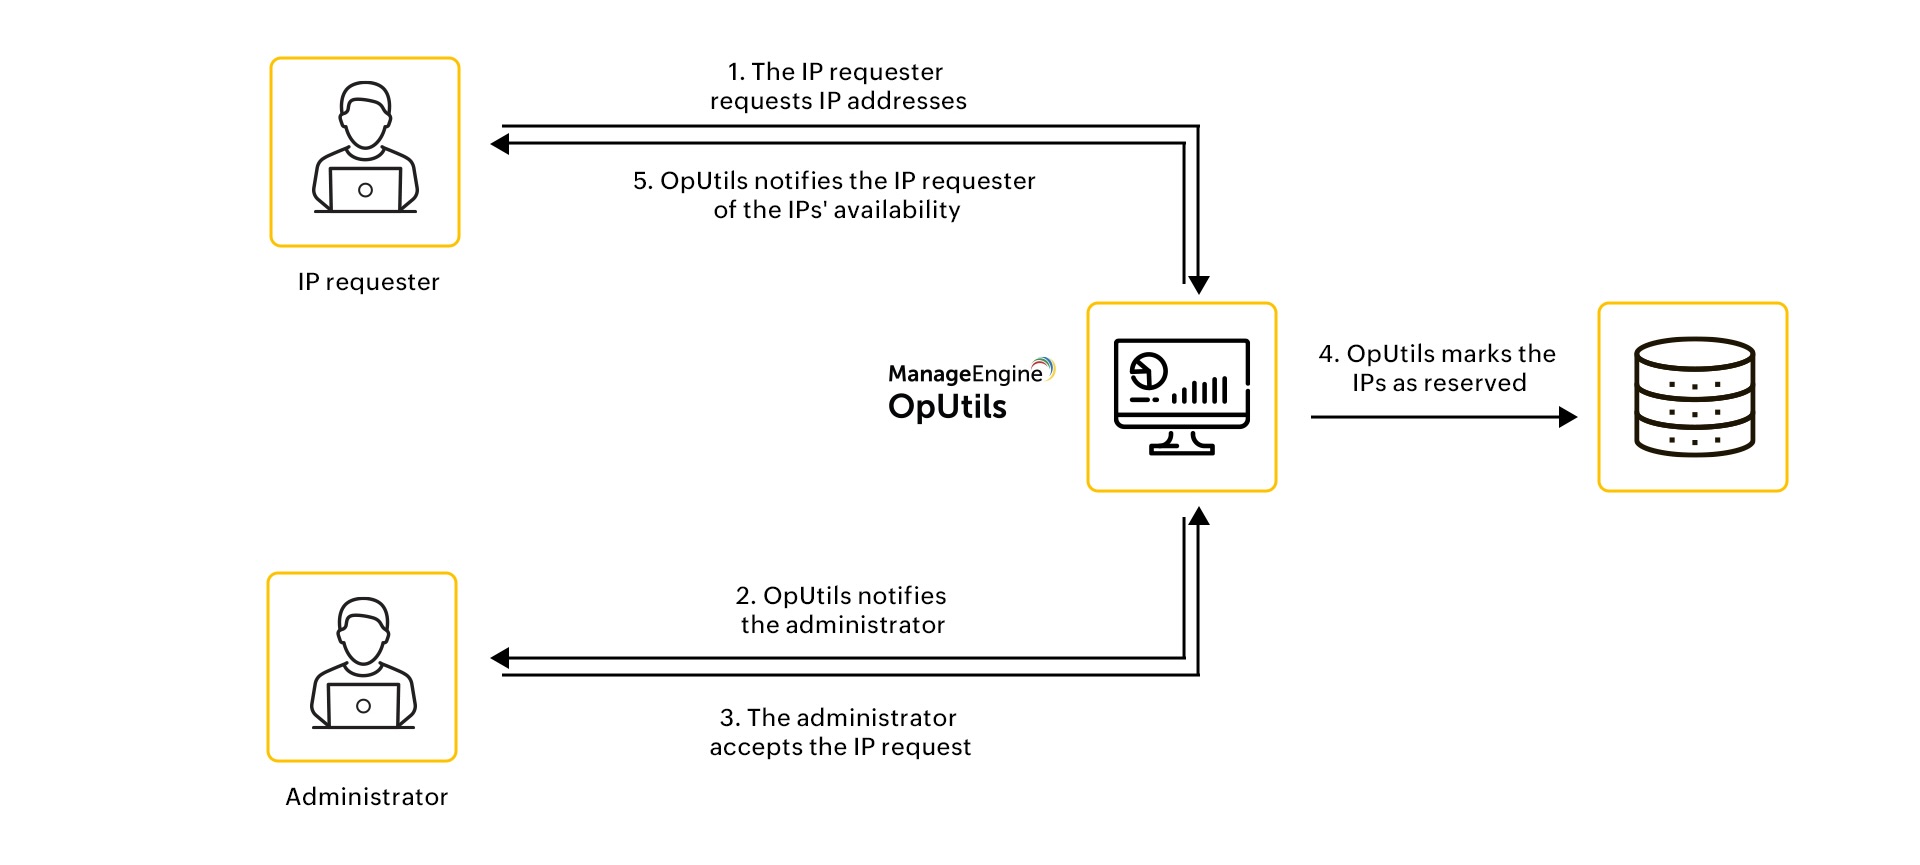 Windows IP Address Conflict - ManageEngine OpUtils